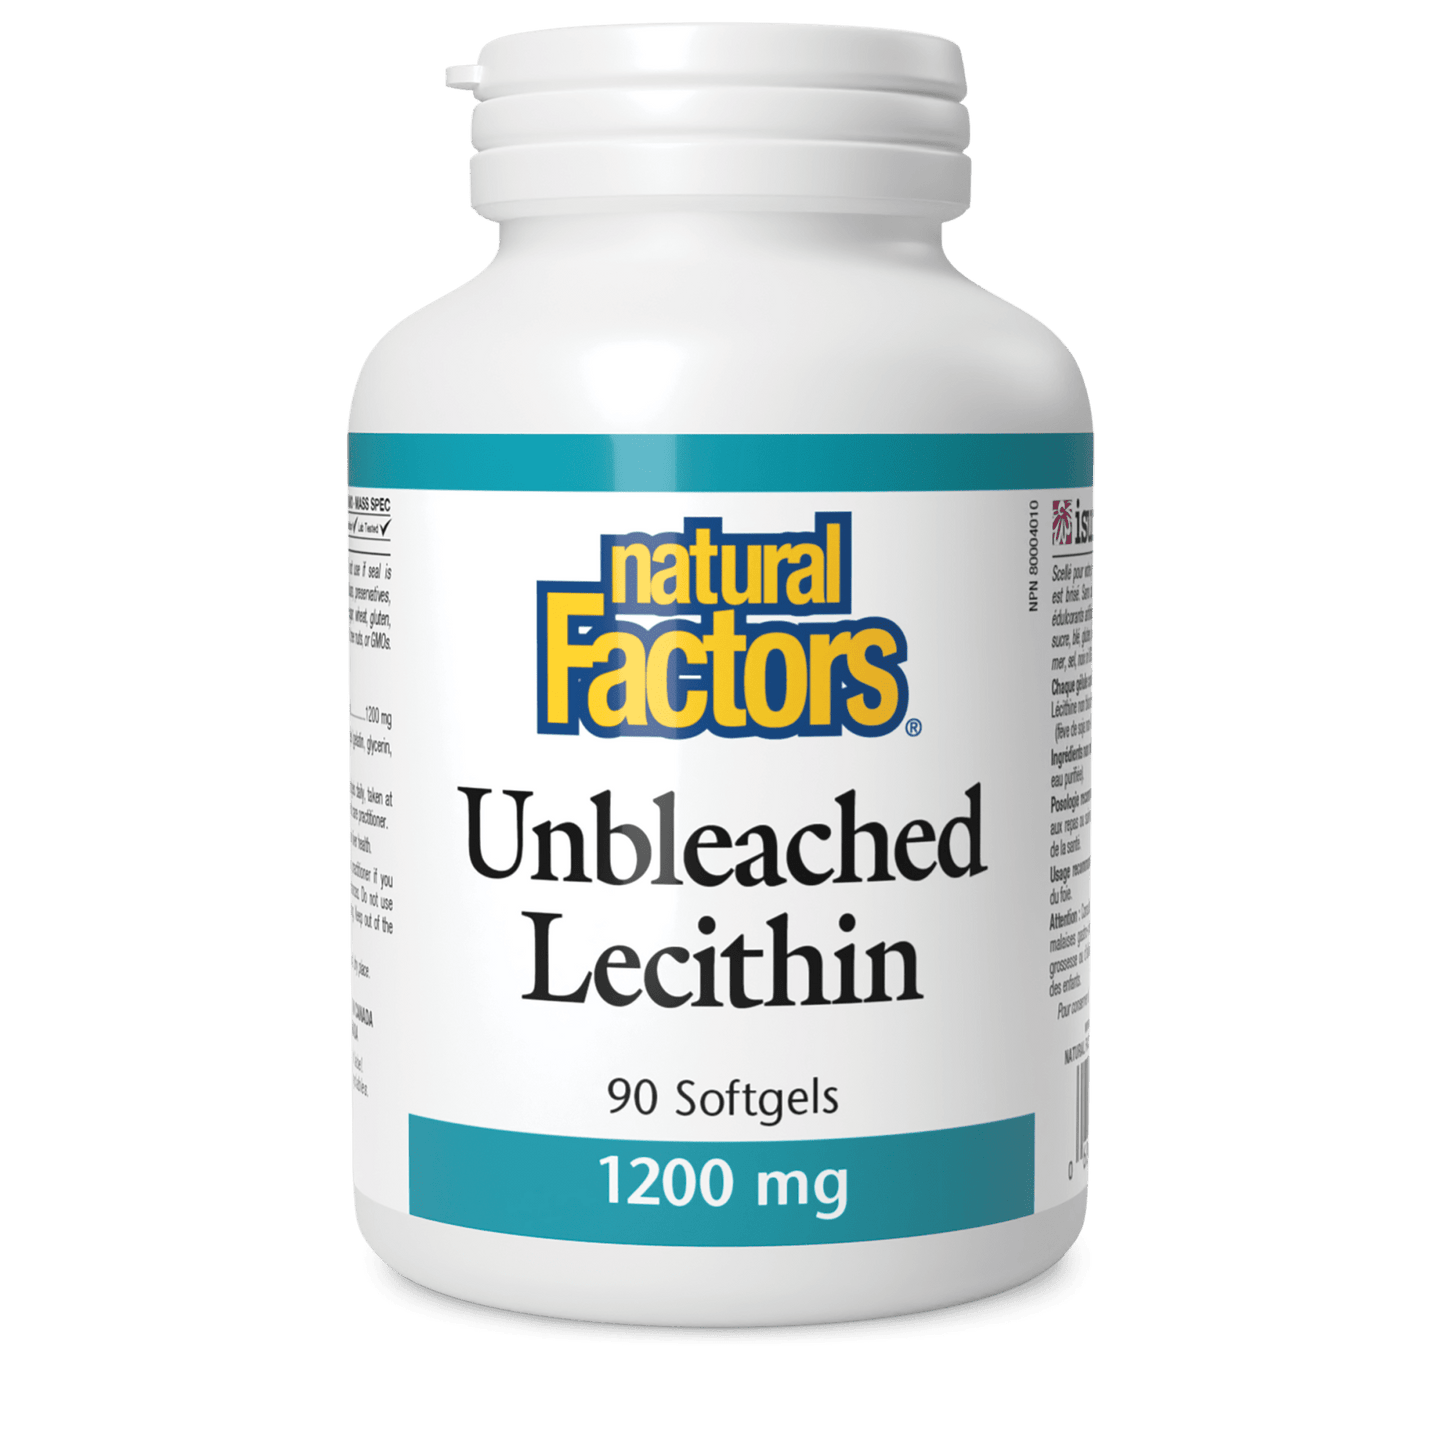 Unbleached Lecithin 1200 mg, Natural Factors|v|image|2600